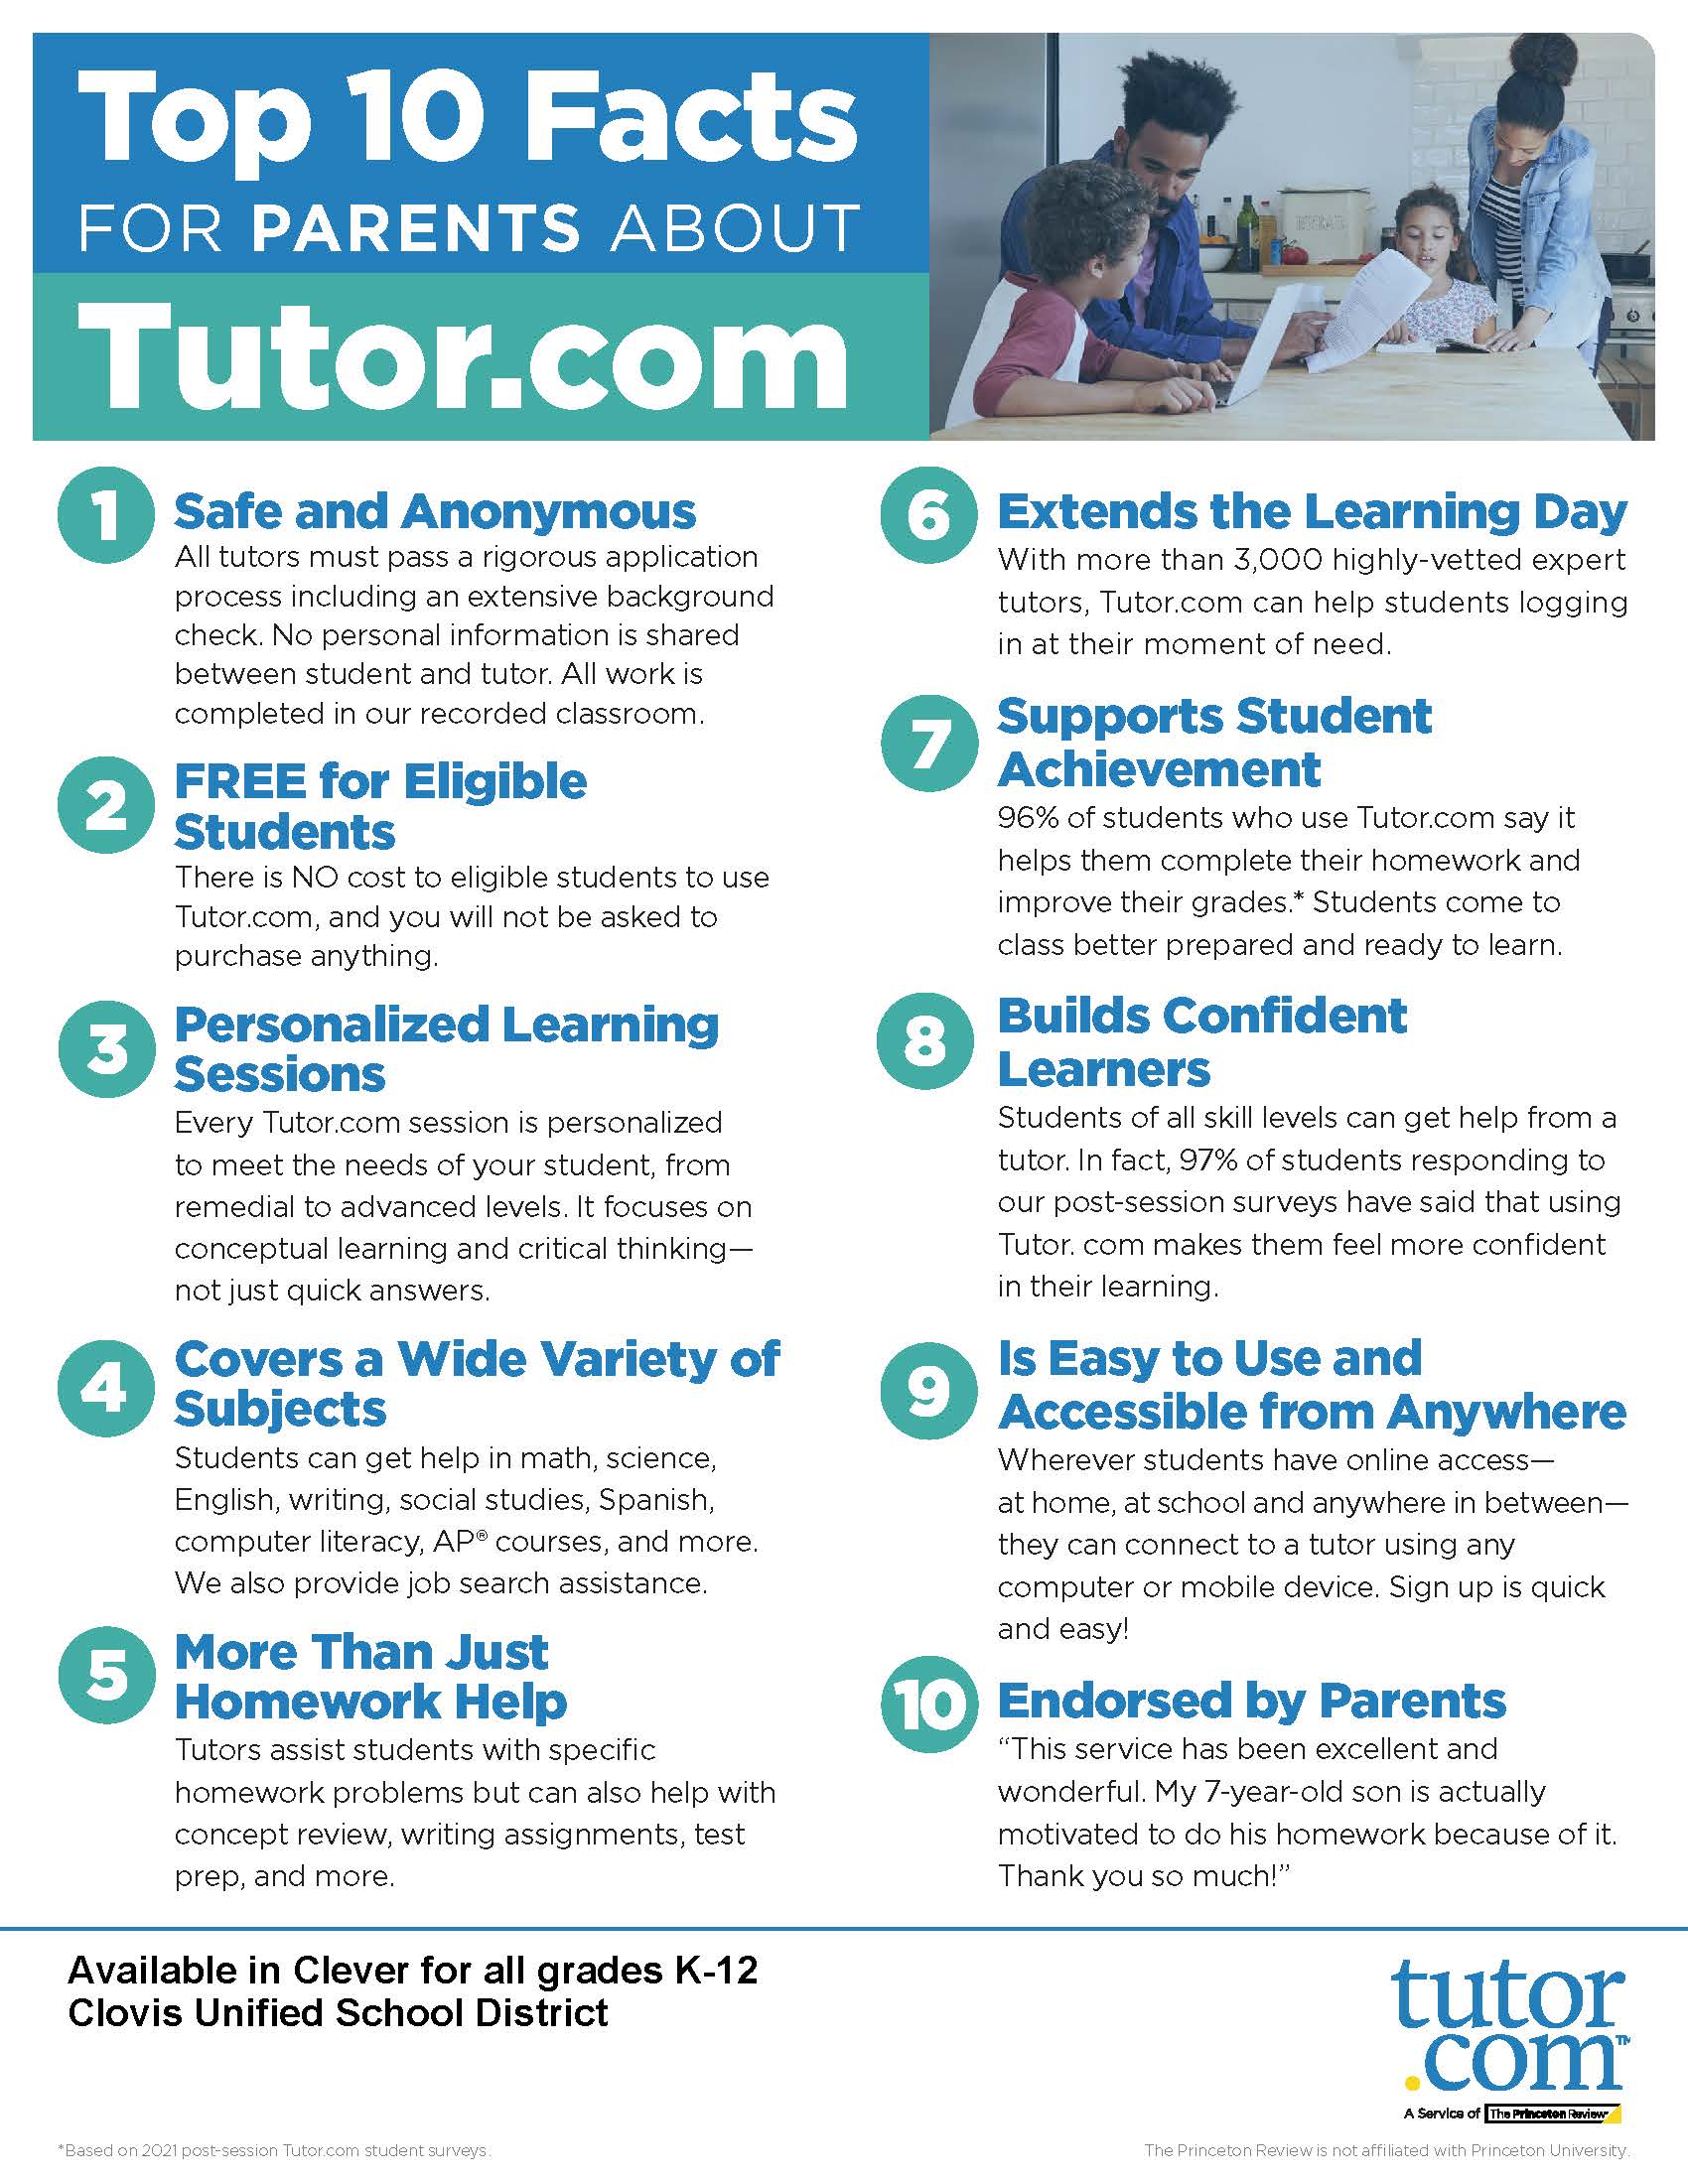 tutor.com facts